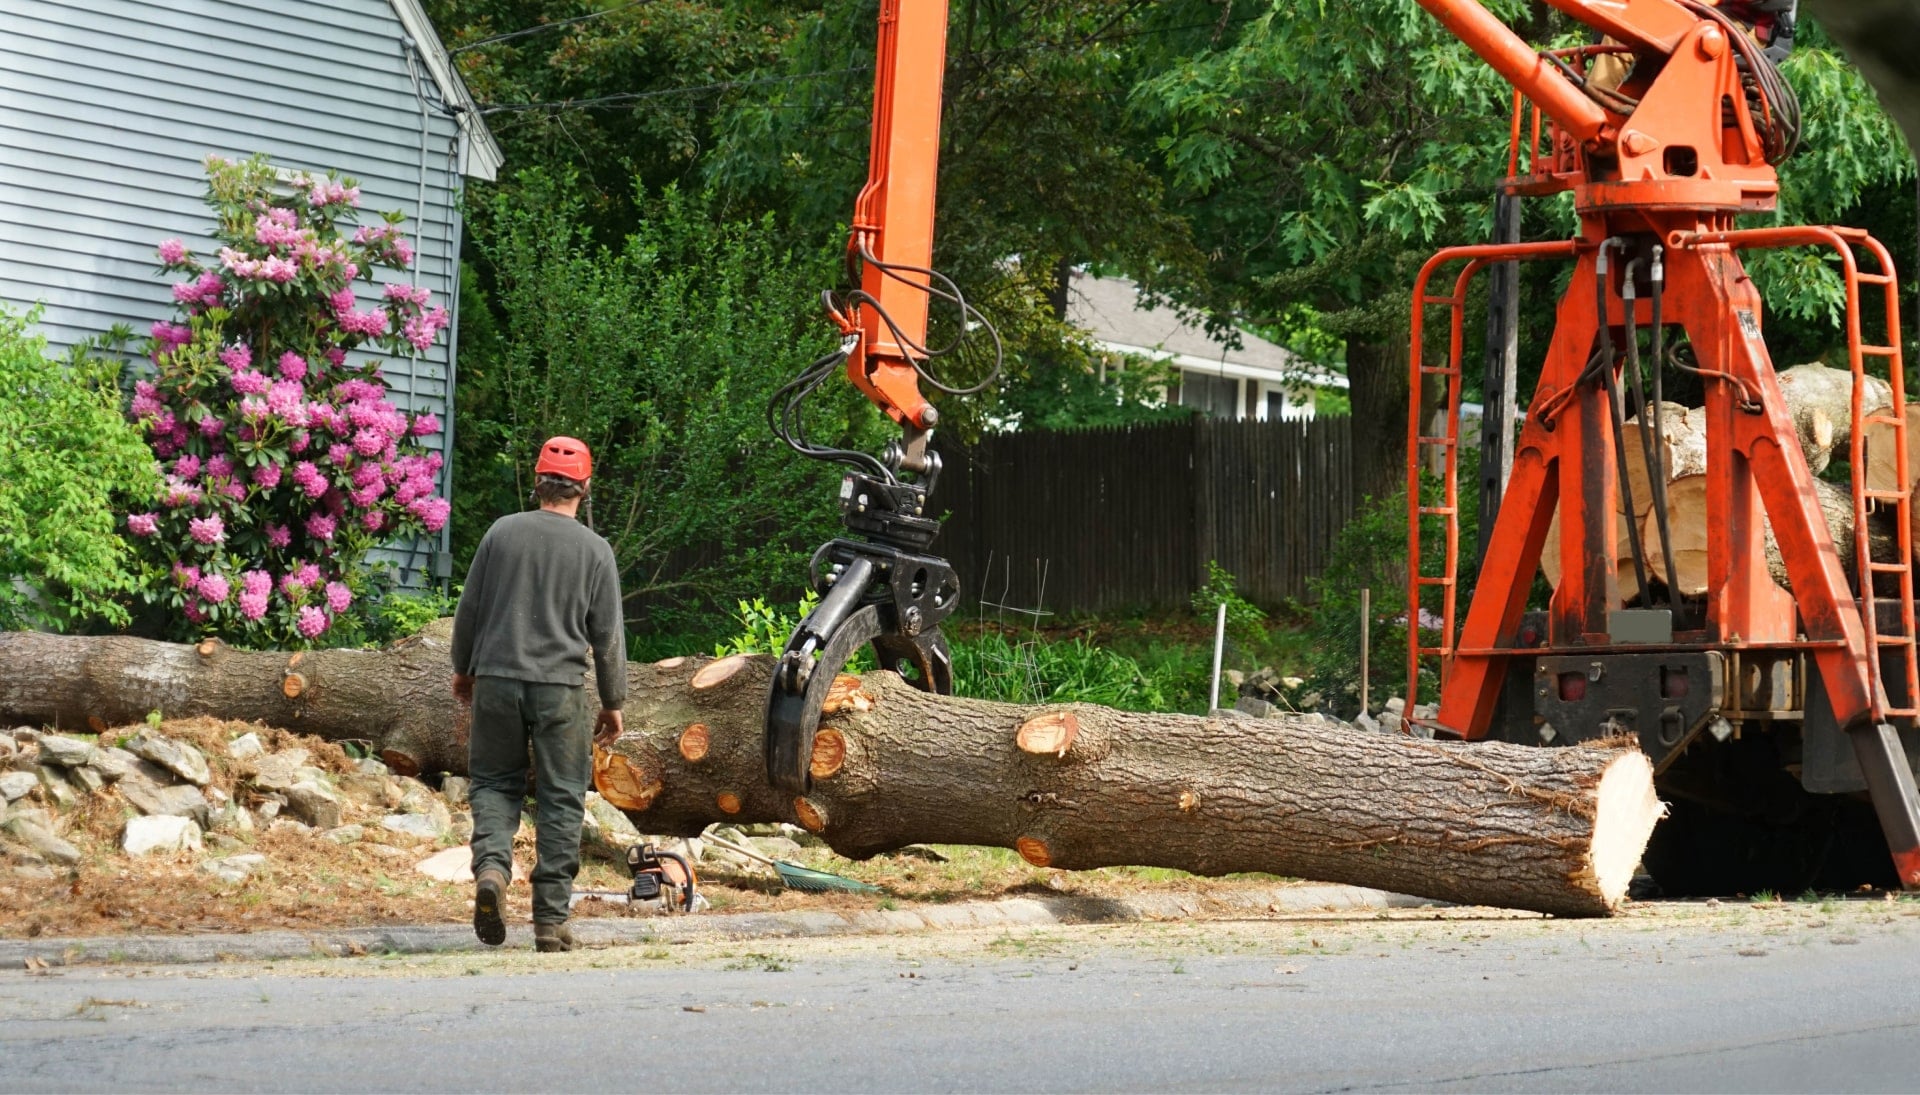 Local partner for Tree removal services in Santa Clarita